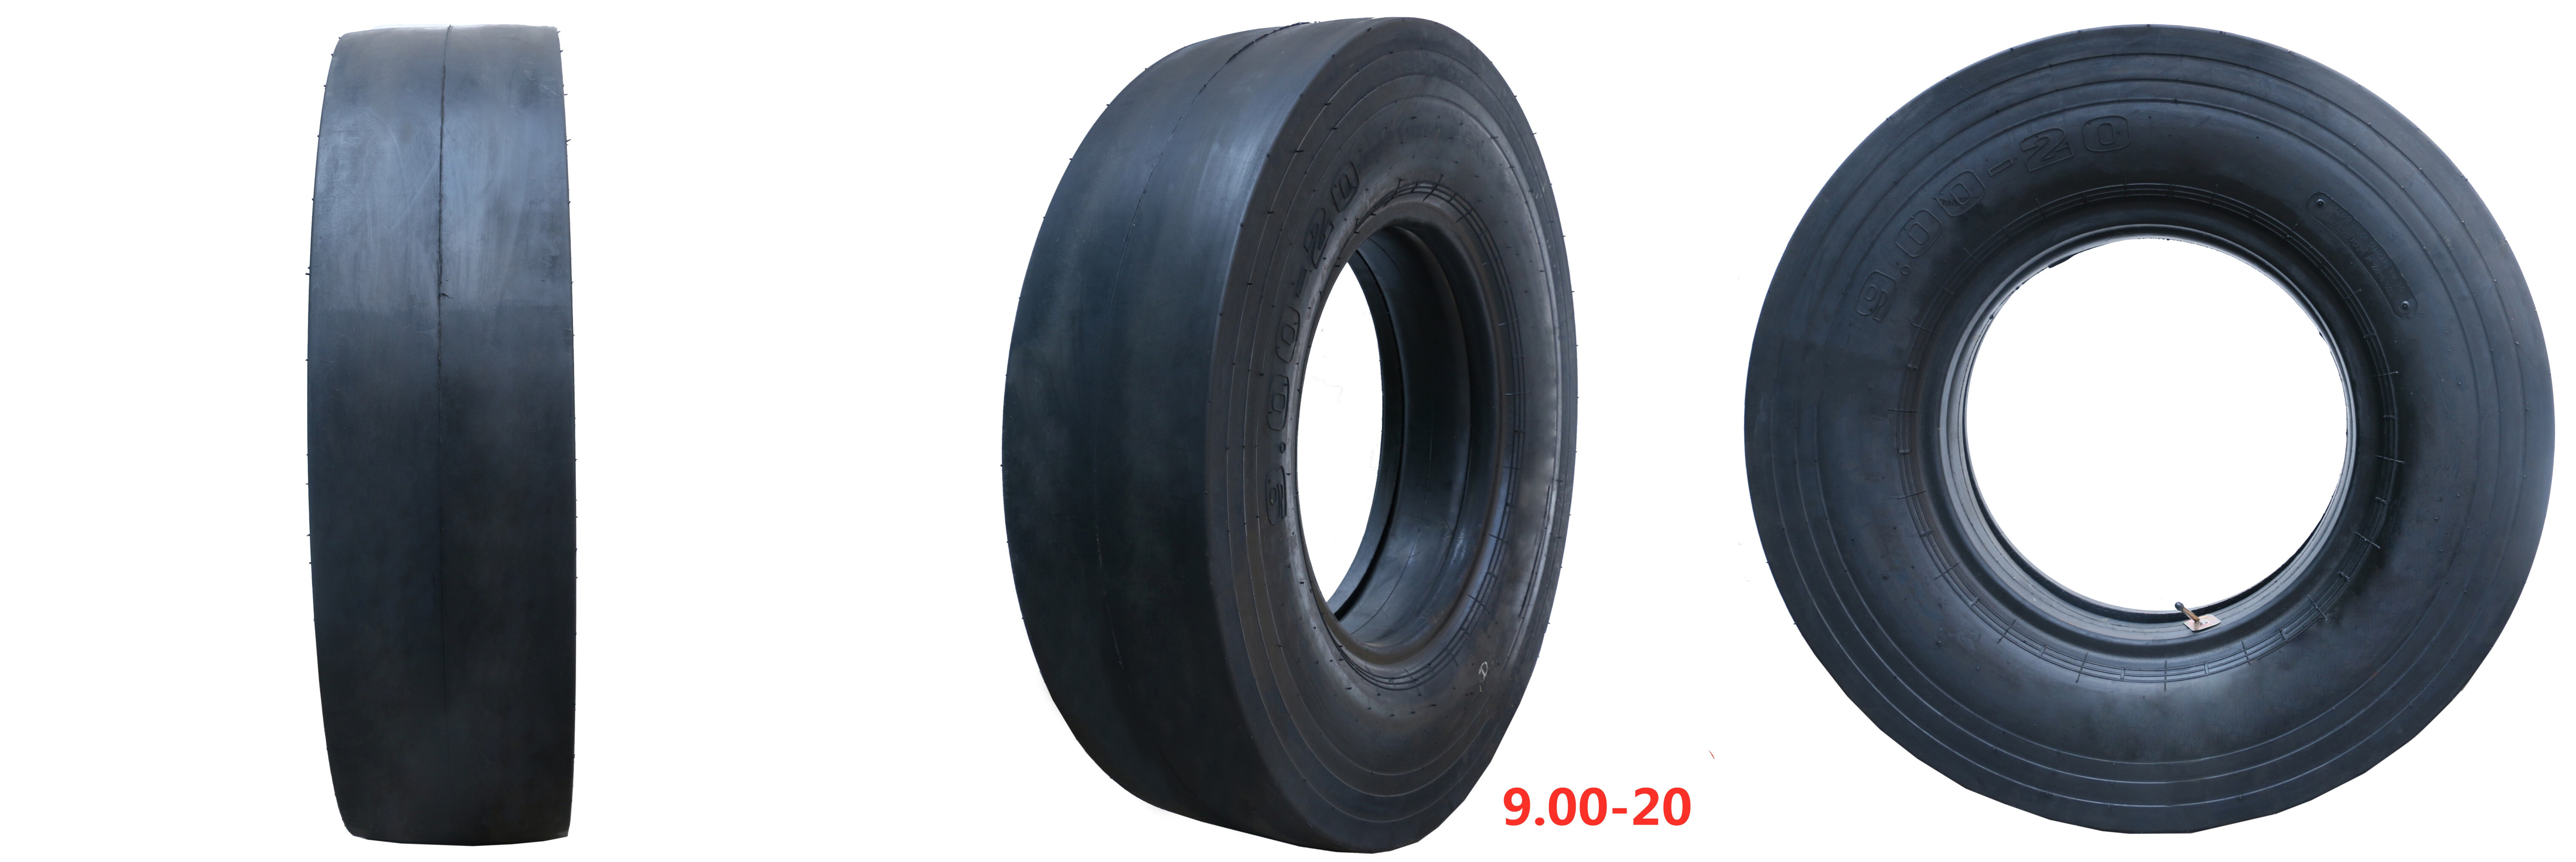 Road roller tyre 9.00-20  C-1 smooth OTR tires compactor tyres  